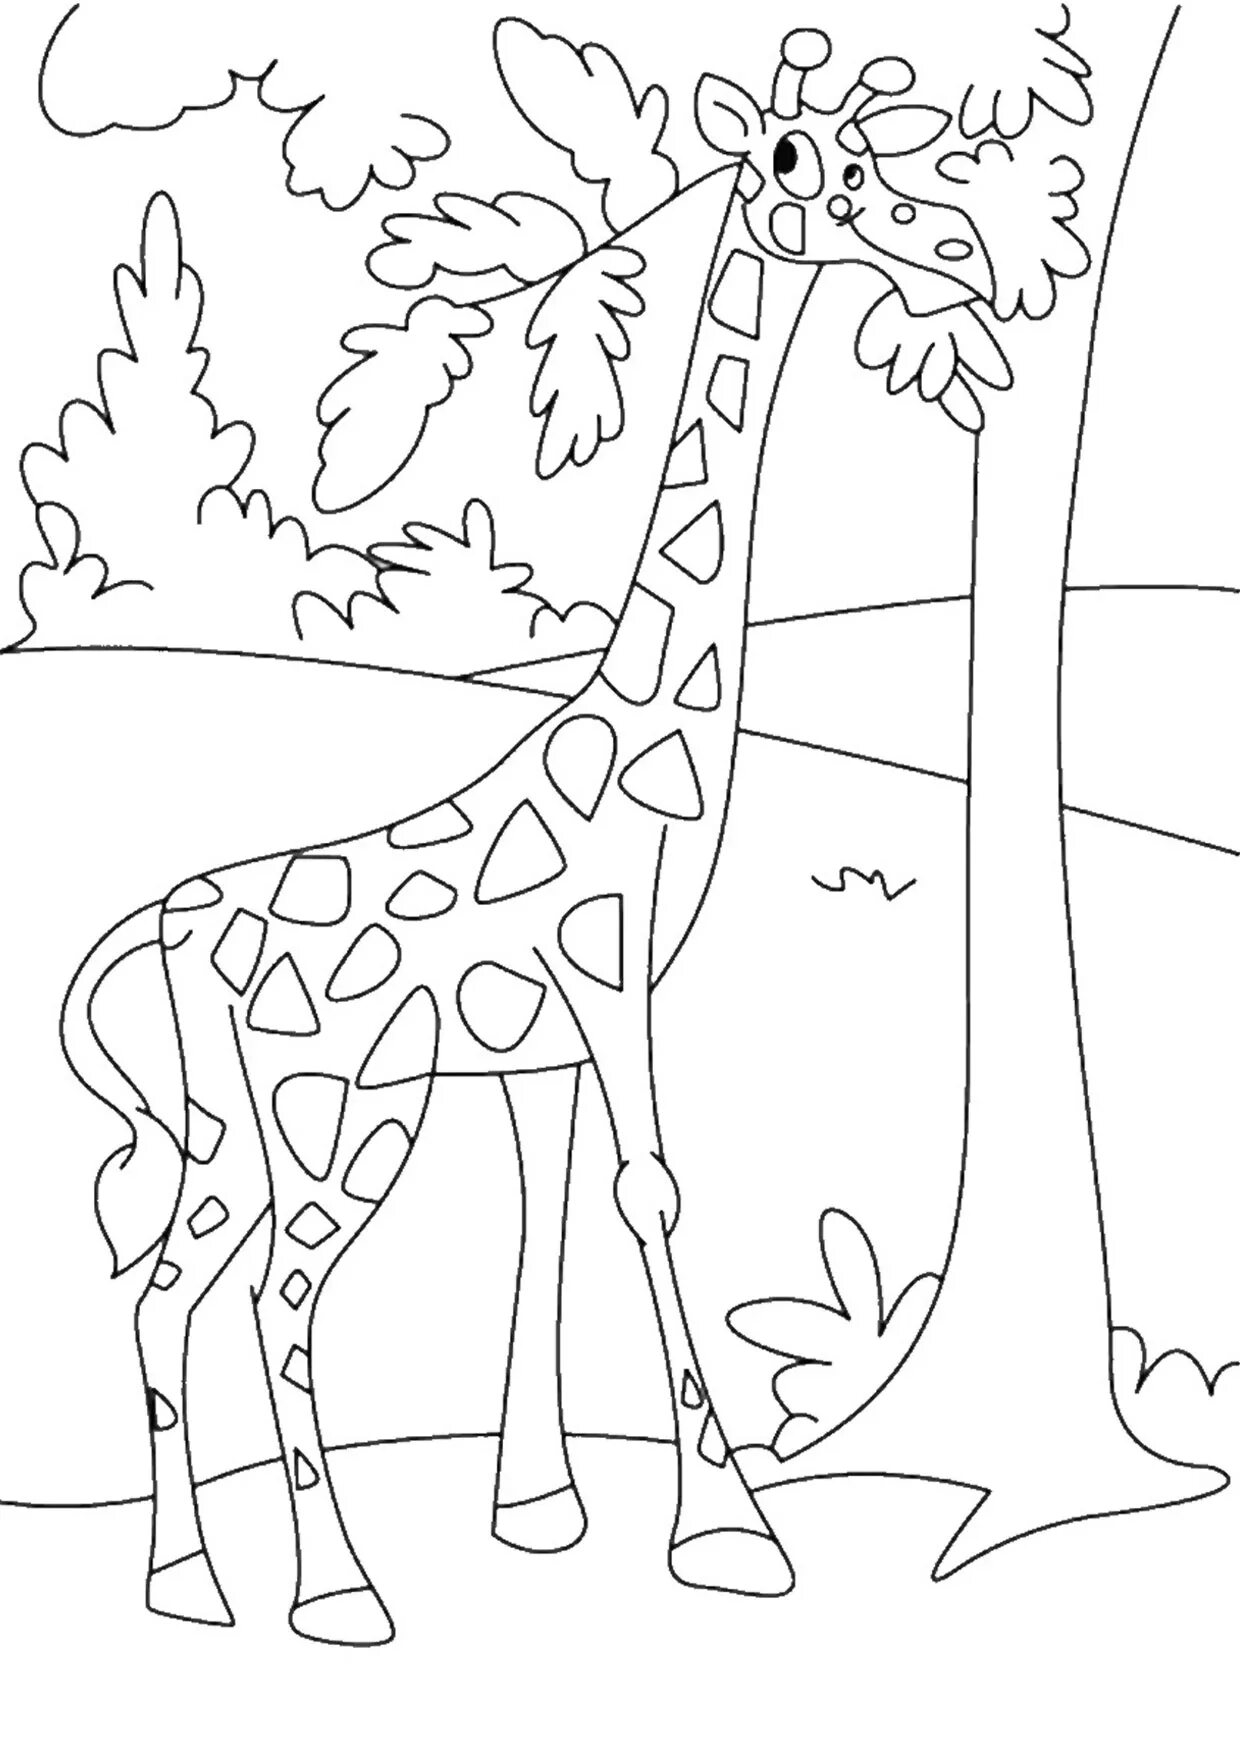 Cute giraffe drawing for kids